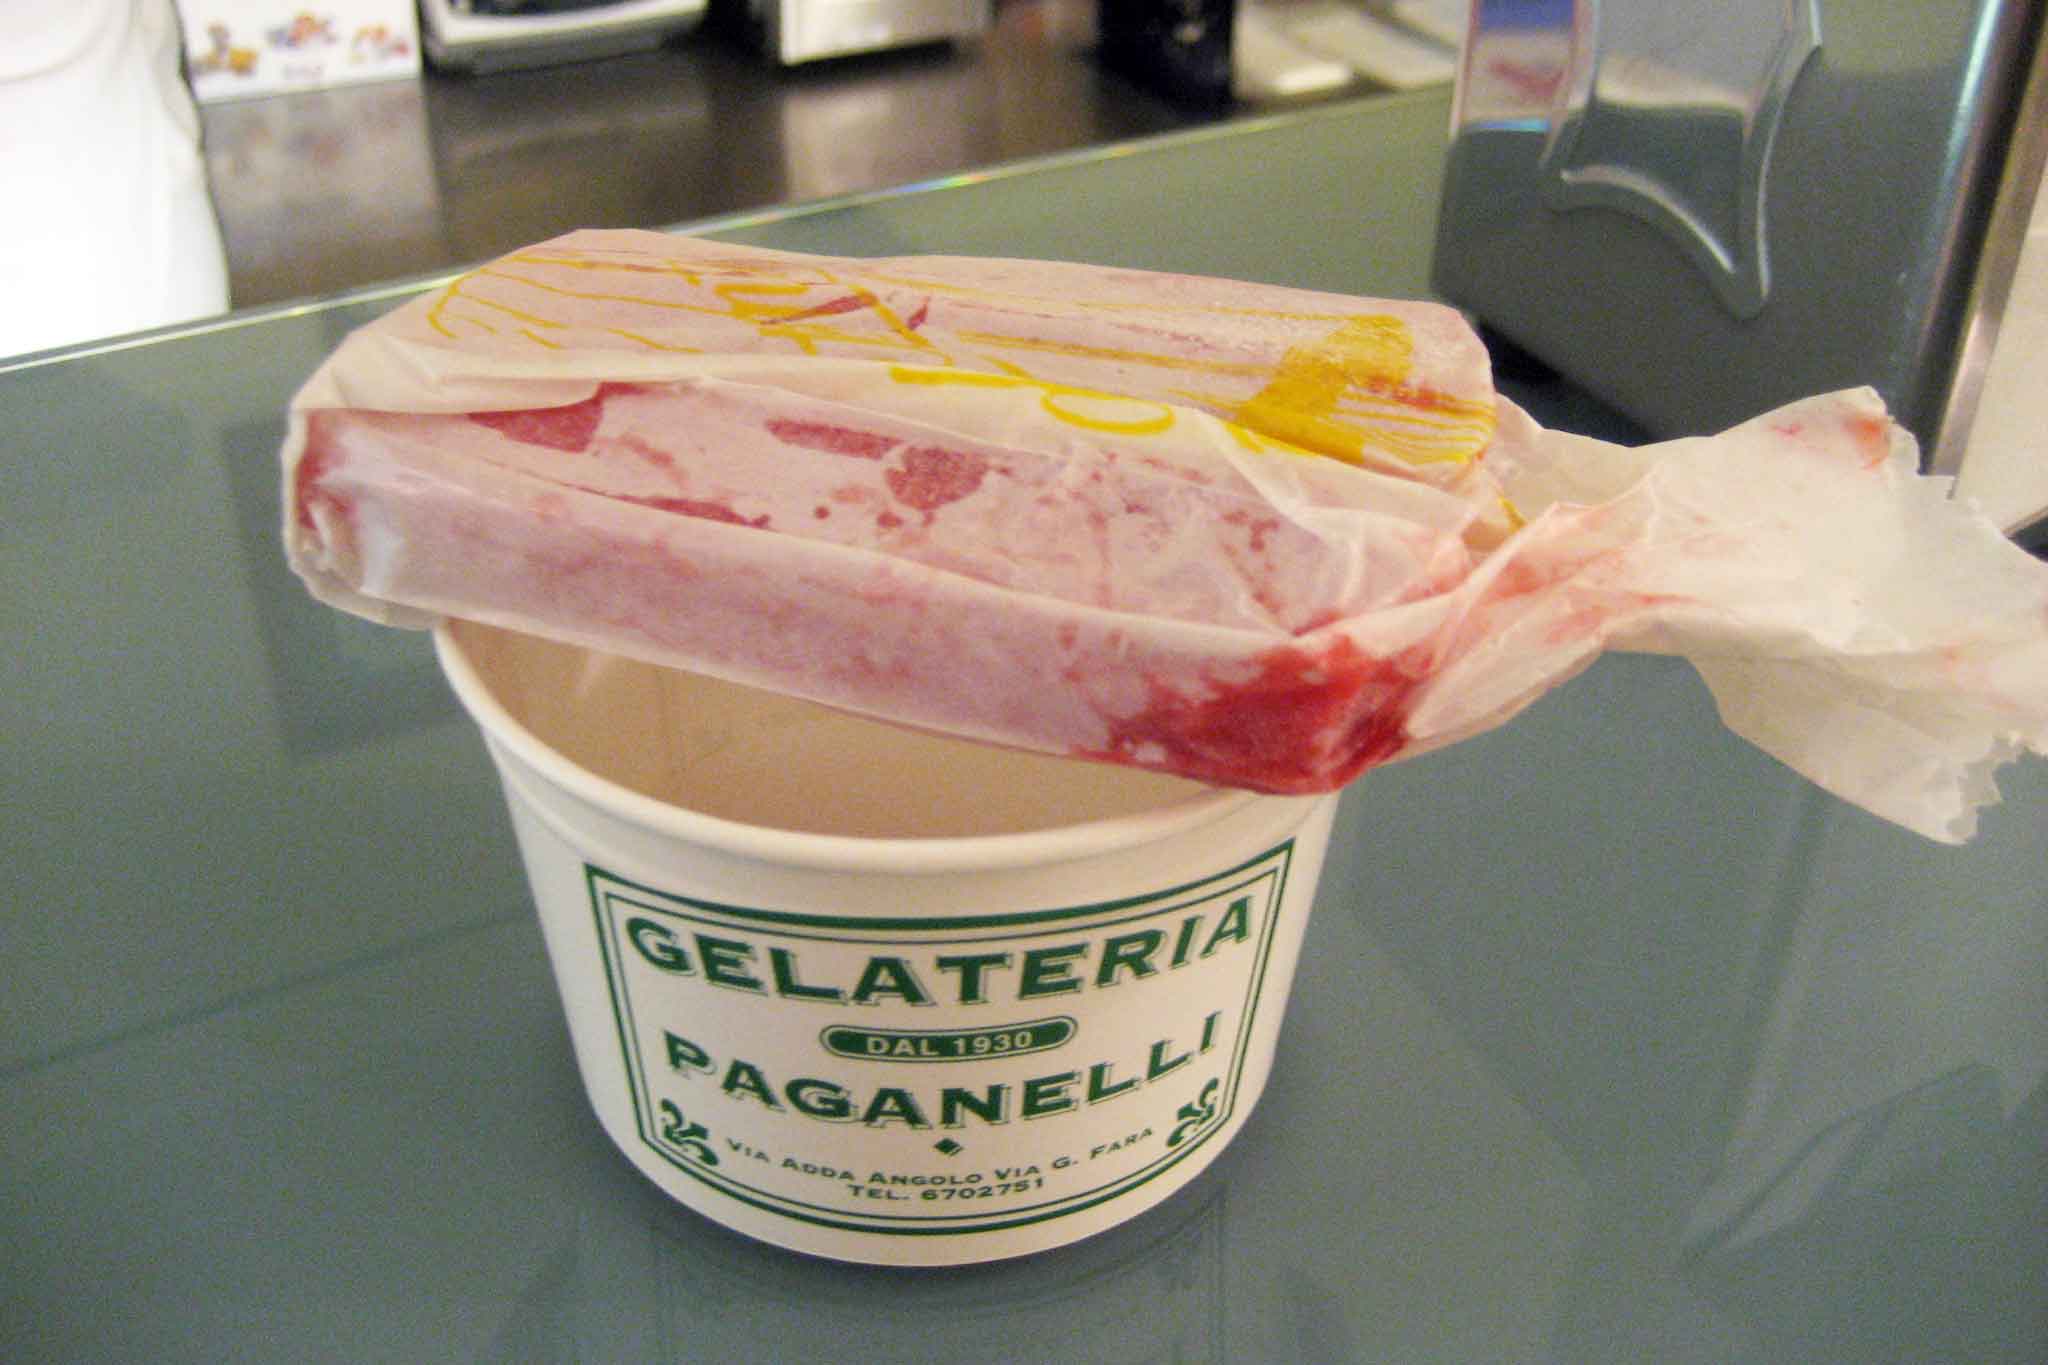 gelateria Paganelli